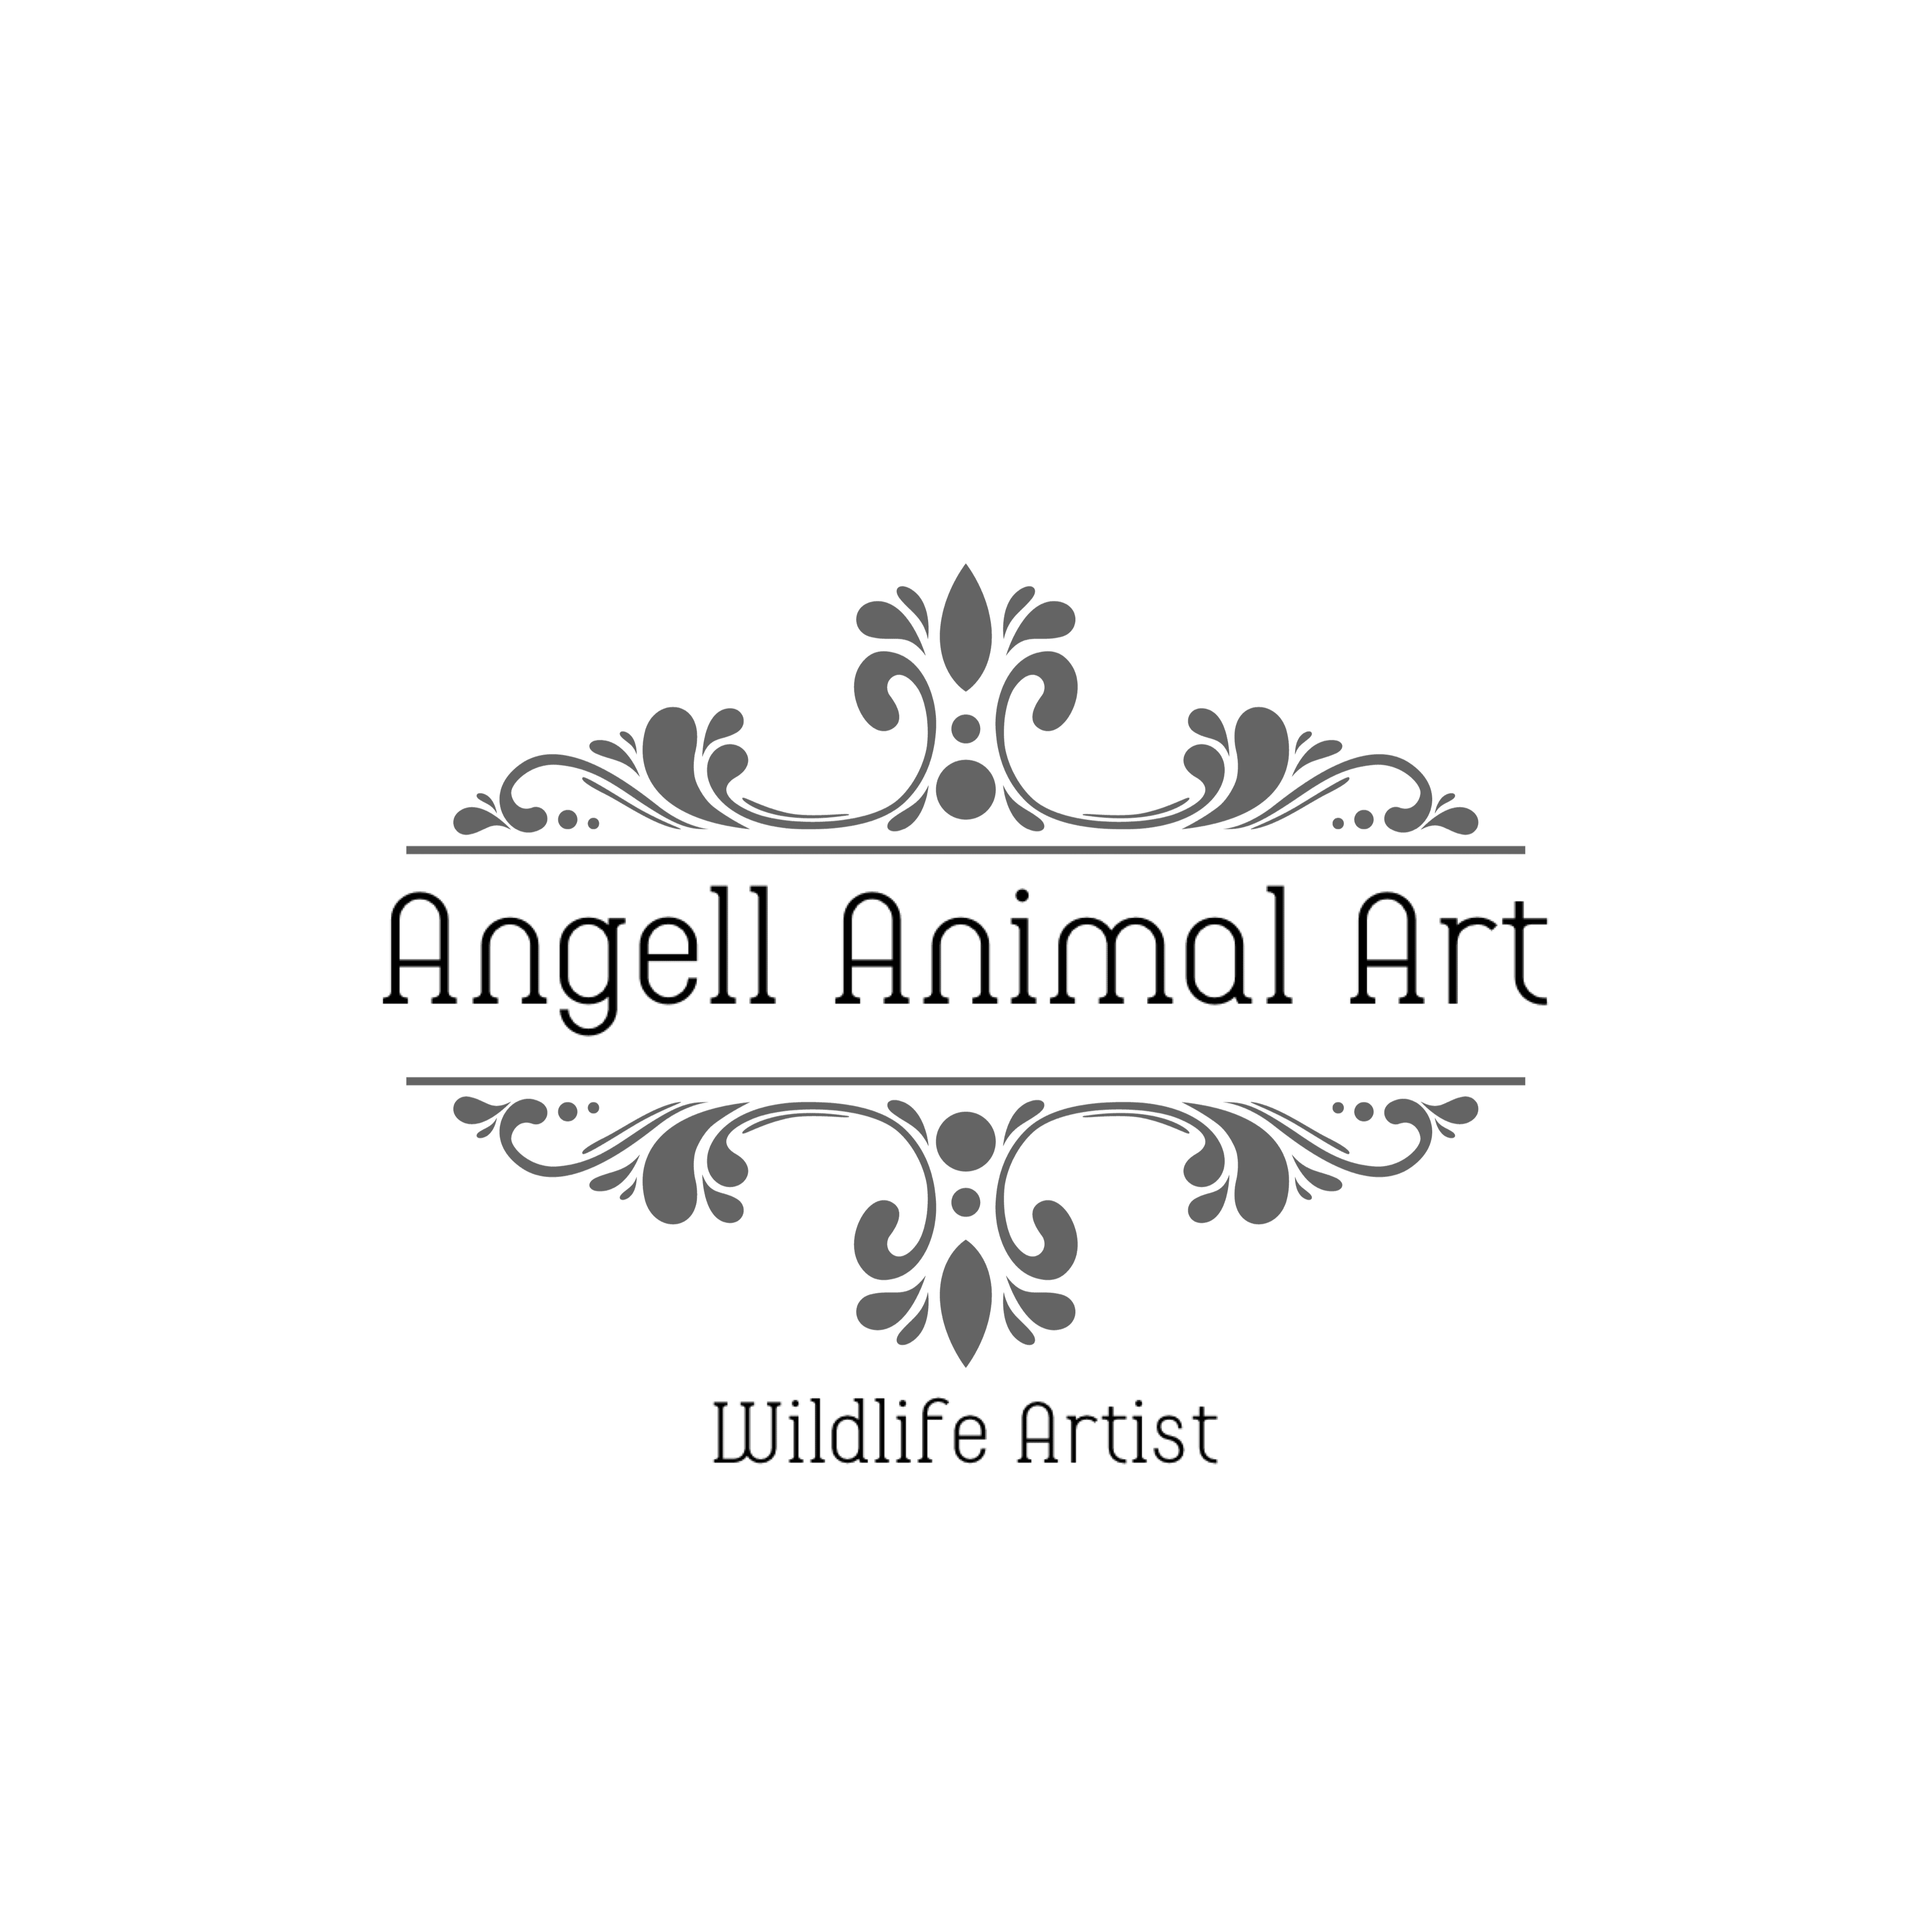 Angell Animal Art